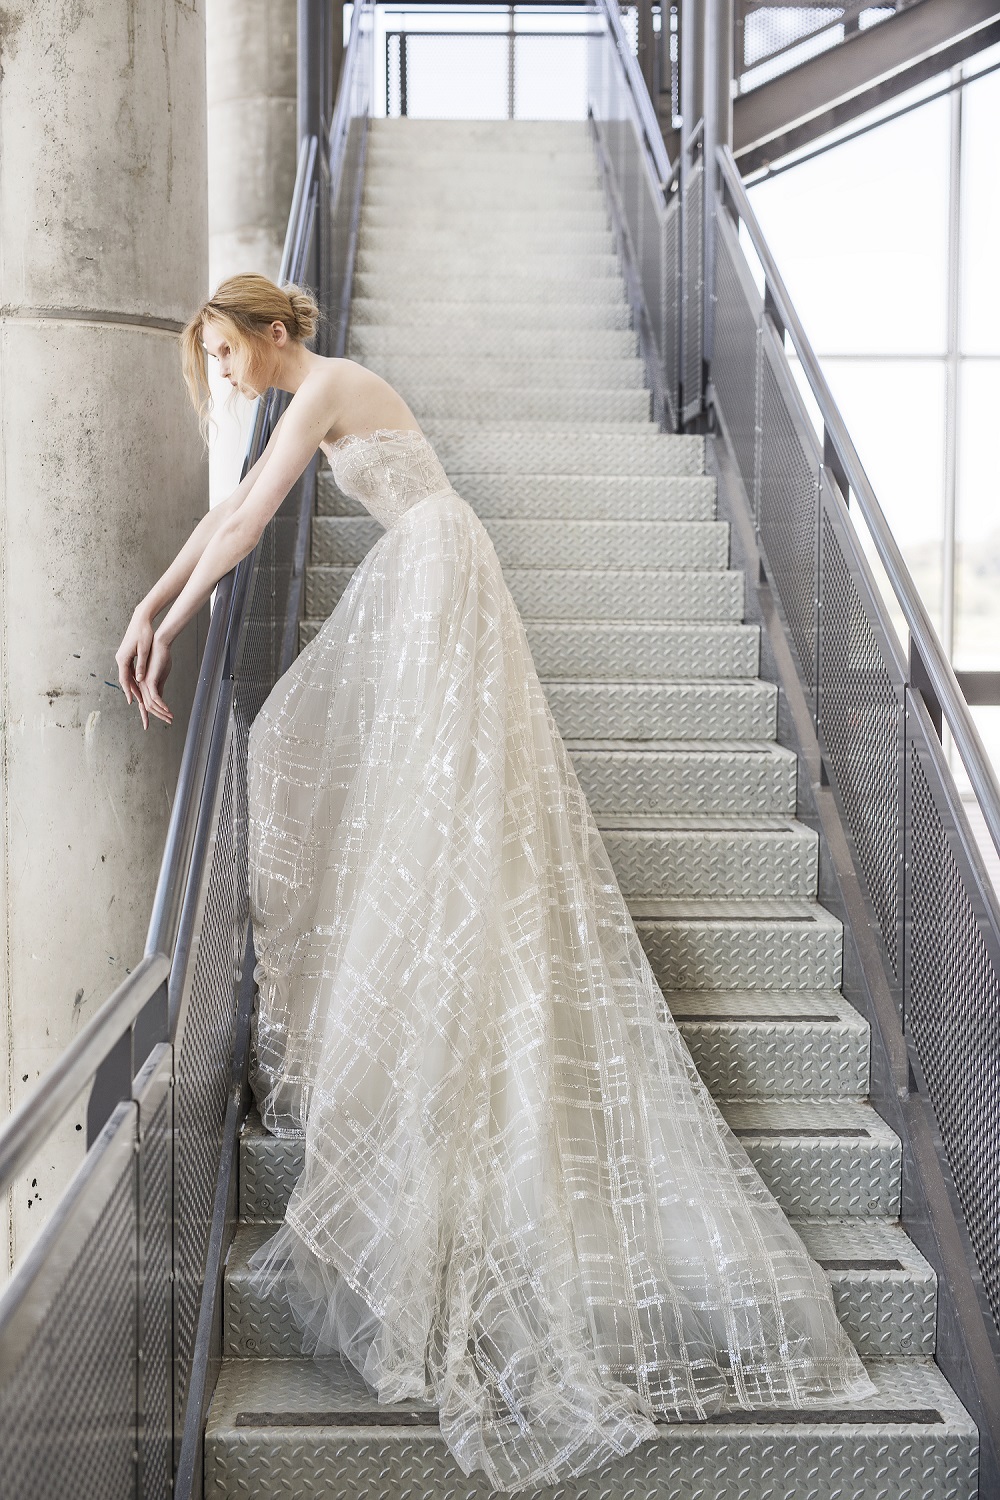 Valentina wedding gown by Mira Zwillinger | Photo by Alexander Lipkin